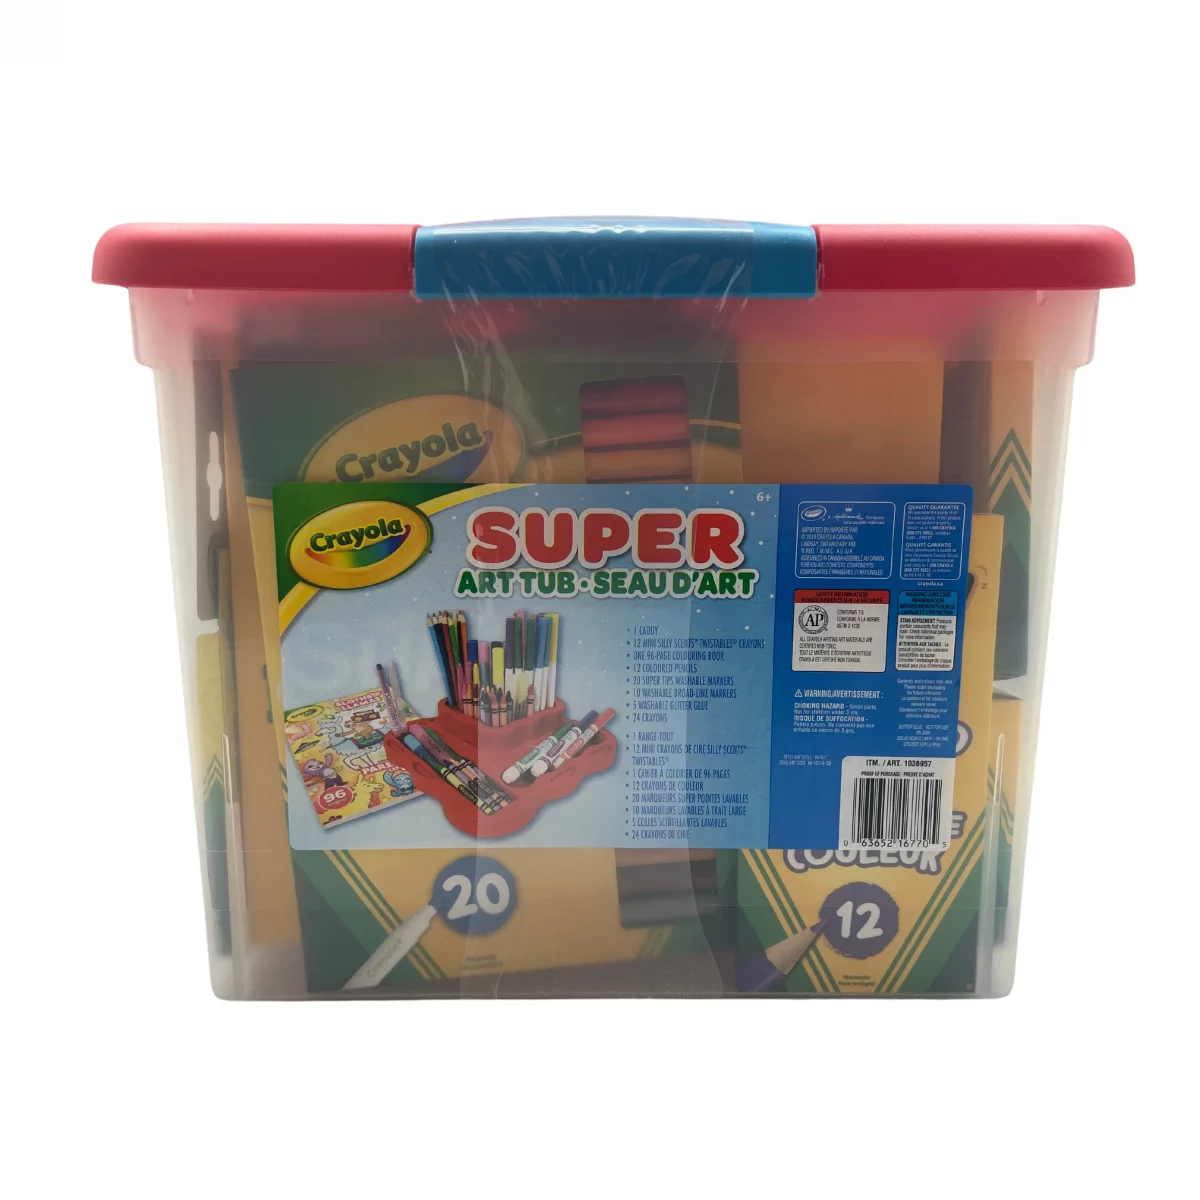 Crayola Super Art Tub / Kid's Arts and Crafts Supplies / Colouring Supplies